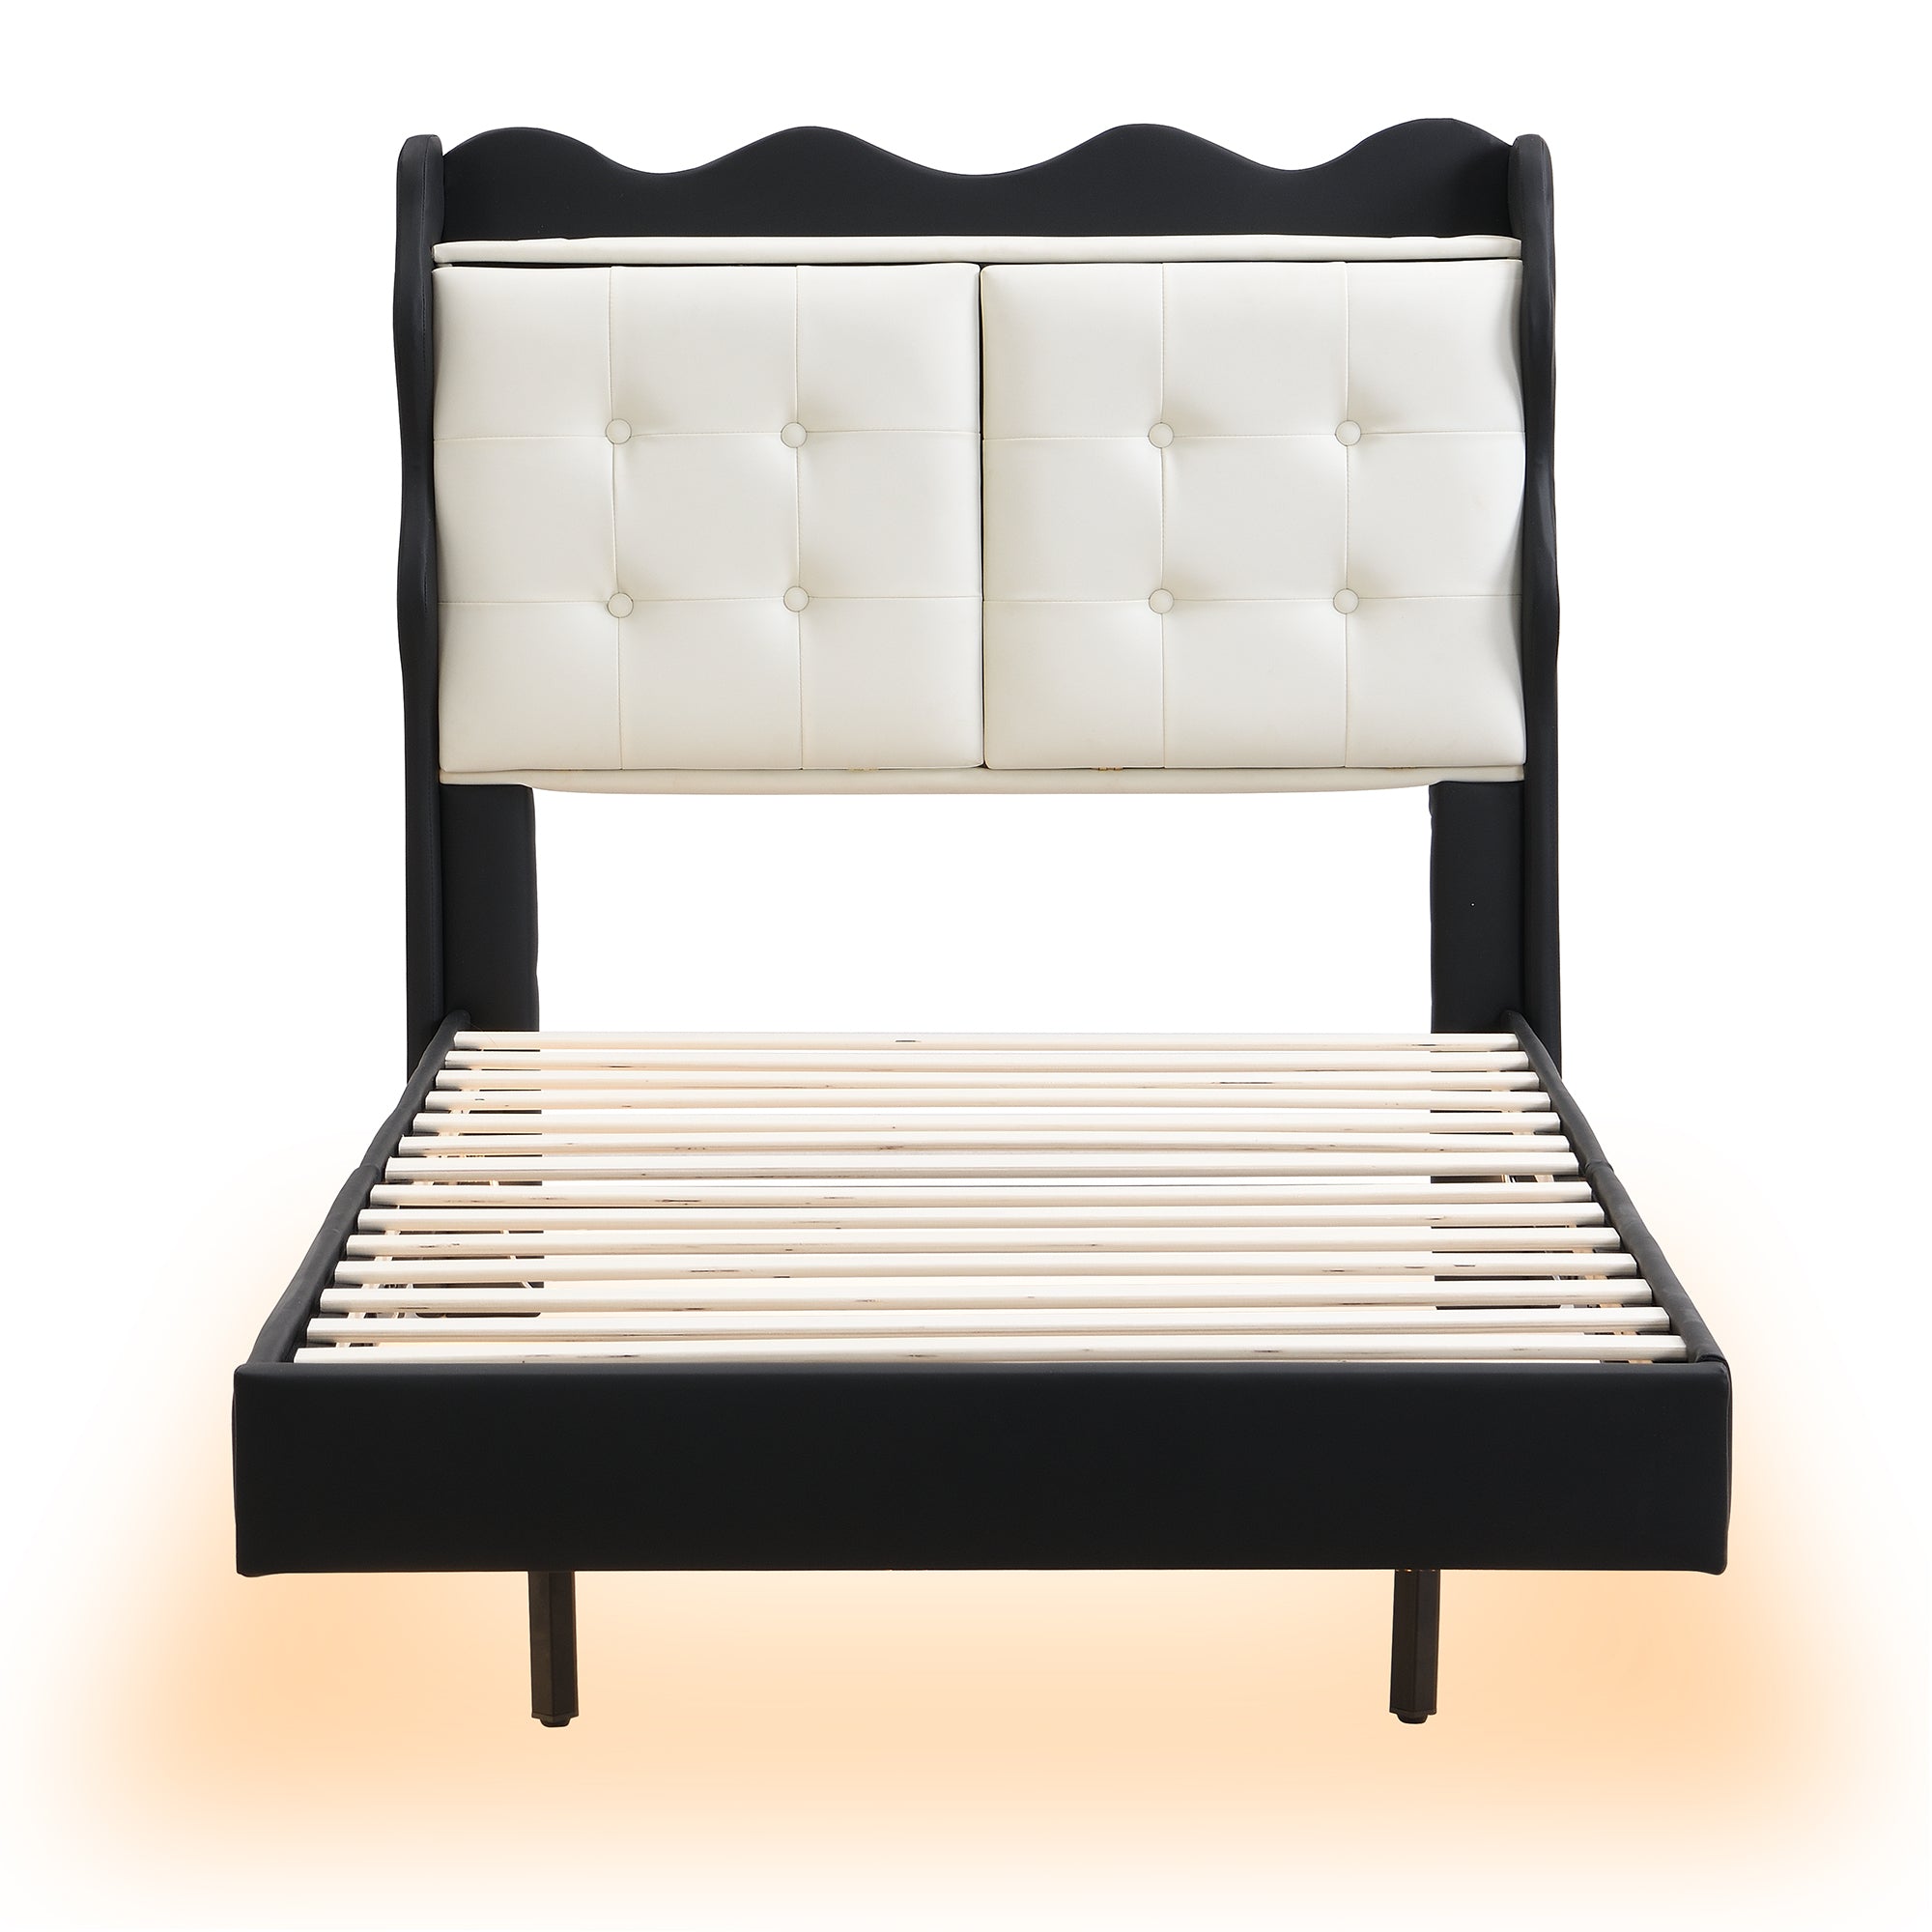 Twin Size Upholstery Platform Bed Frame with LED Light black-upholstered